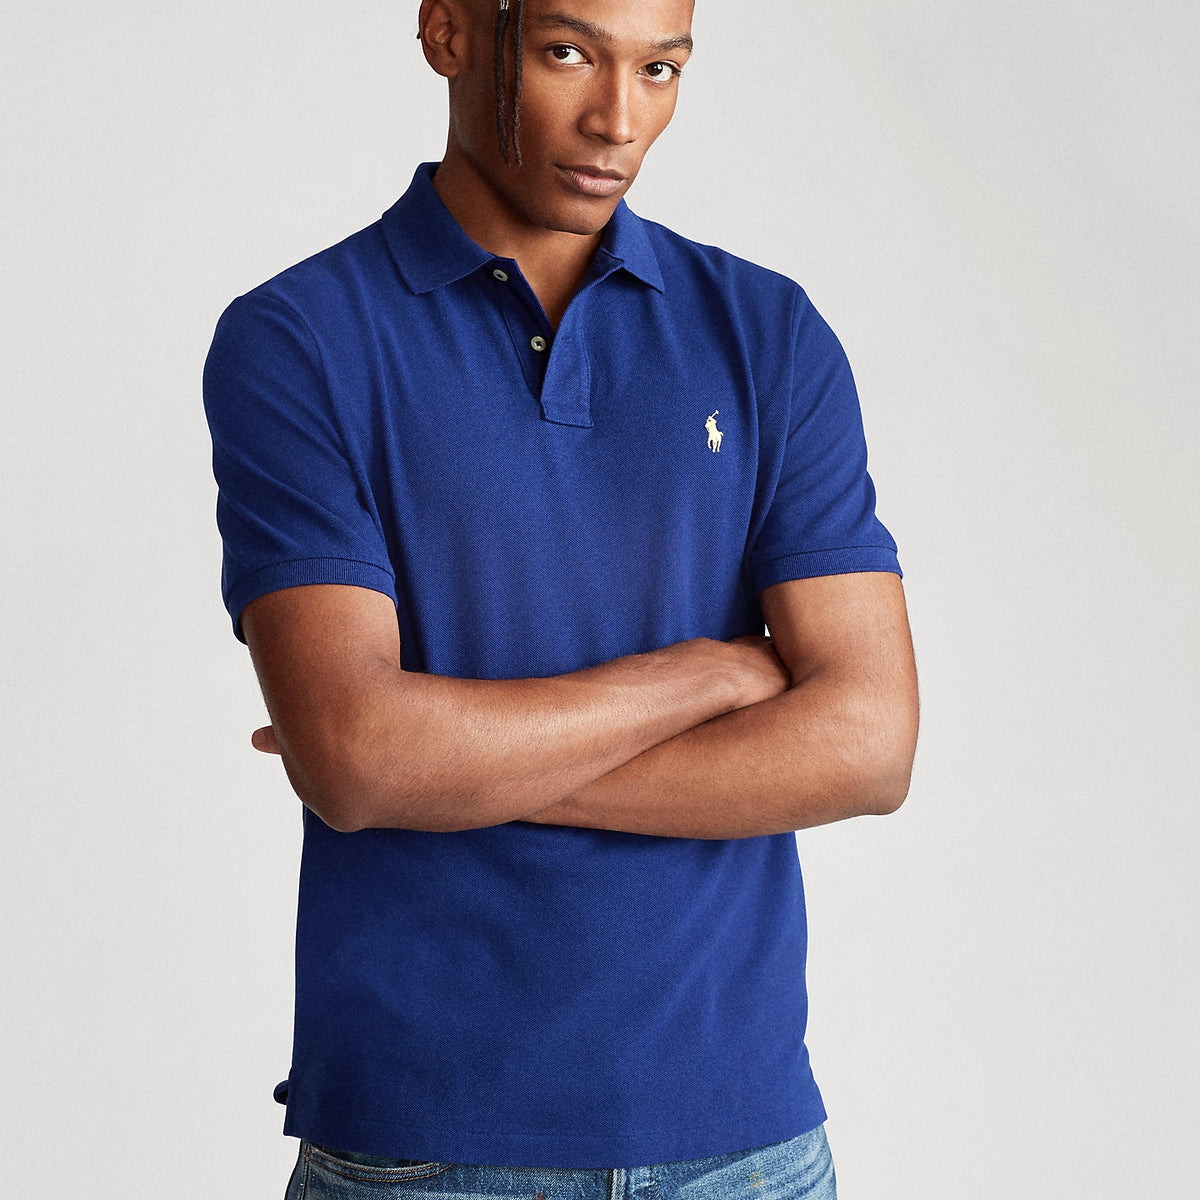 RL basic sp blue exclusive polo shirt